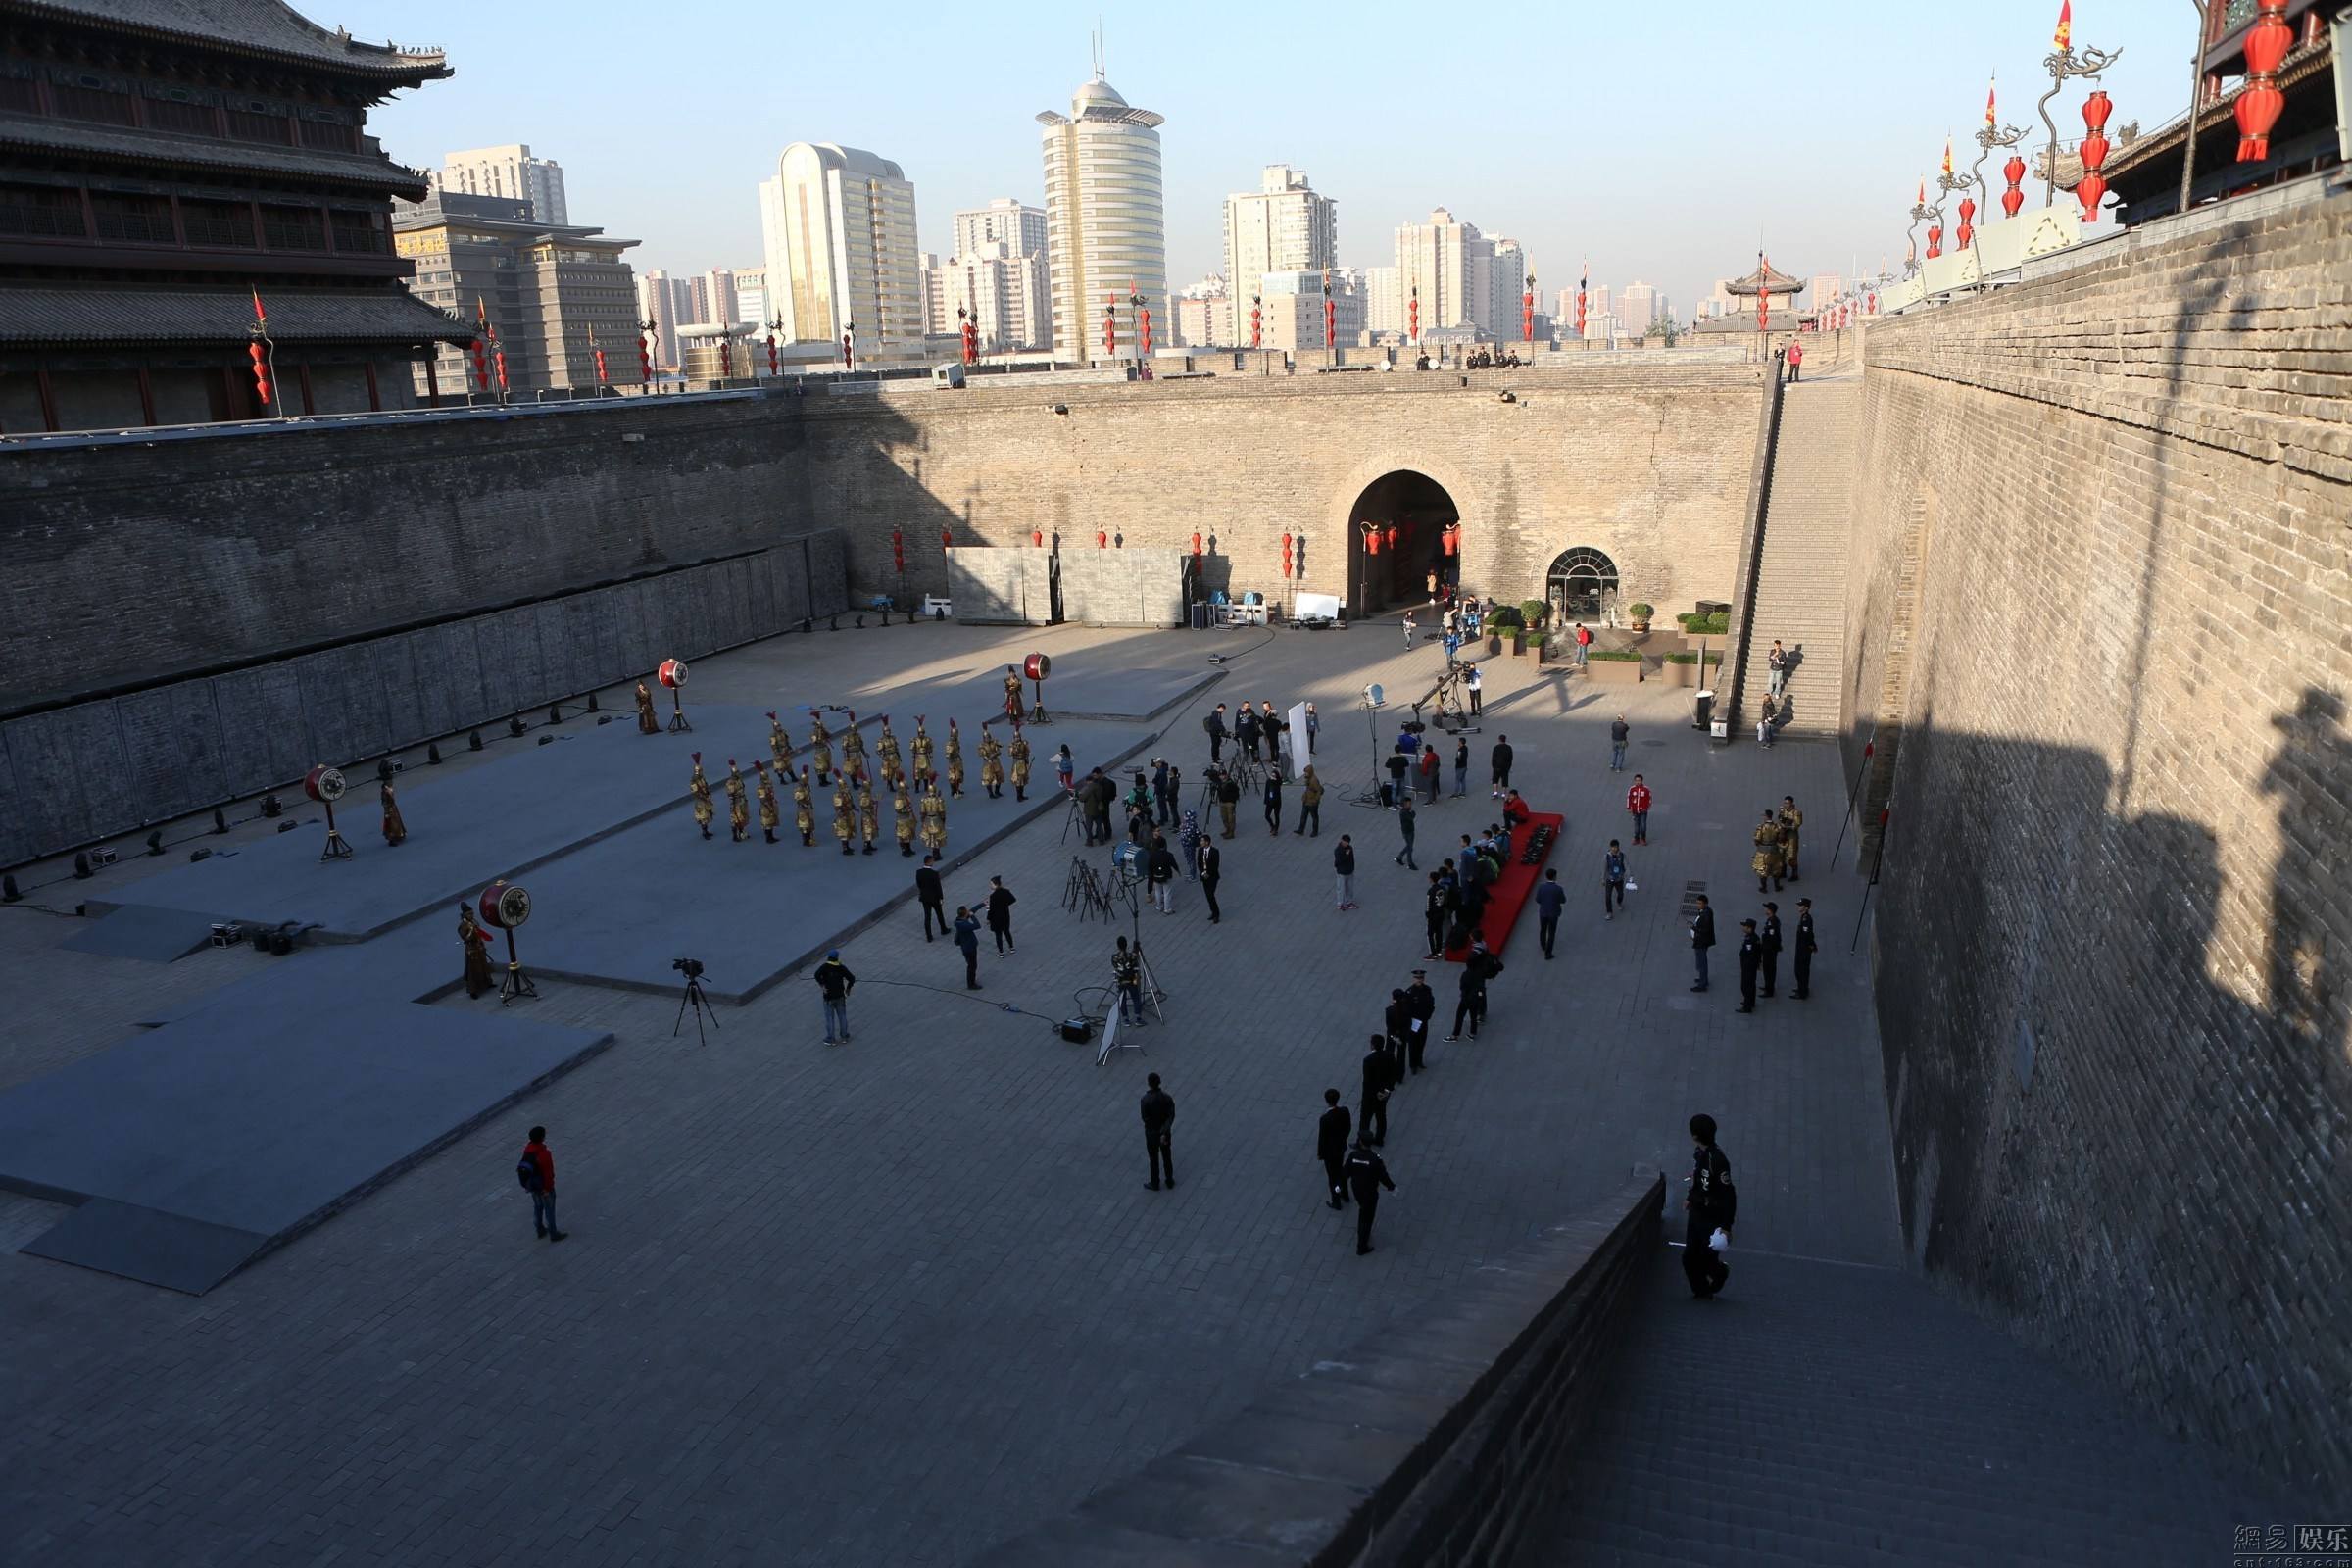 Xian ancient City Wall